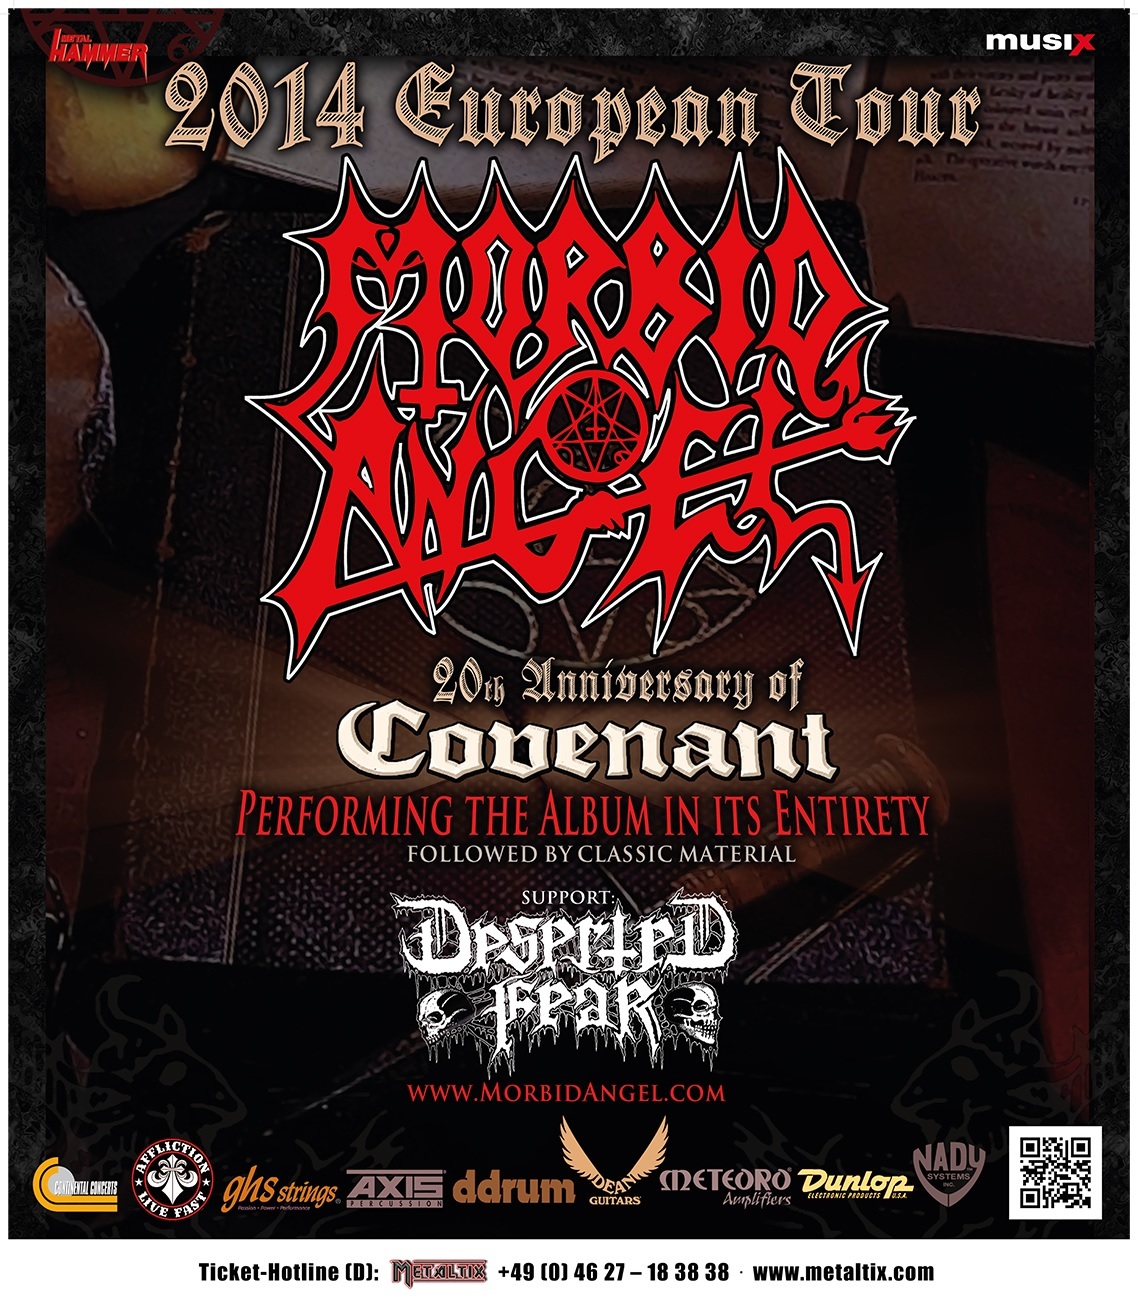 MORBID ANGEL Covenant TourposterA1 2014